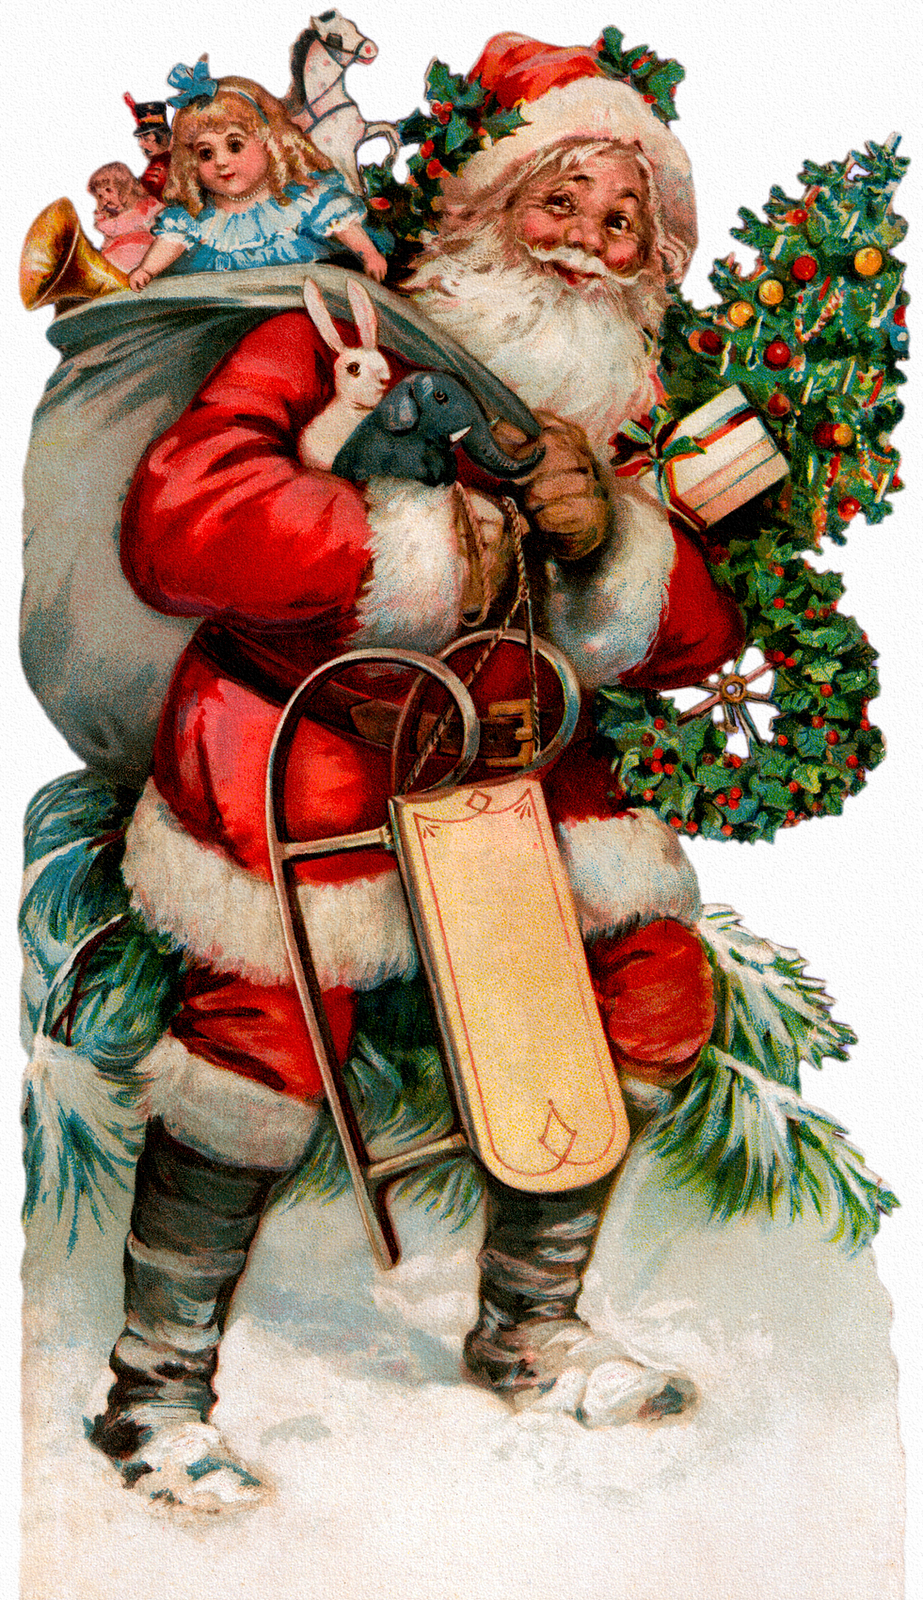 Vintage Santa Claus Cards and a Holiday wallpaper – The Long Goodbye